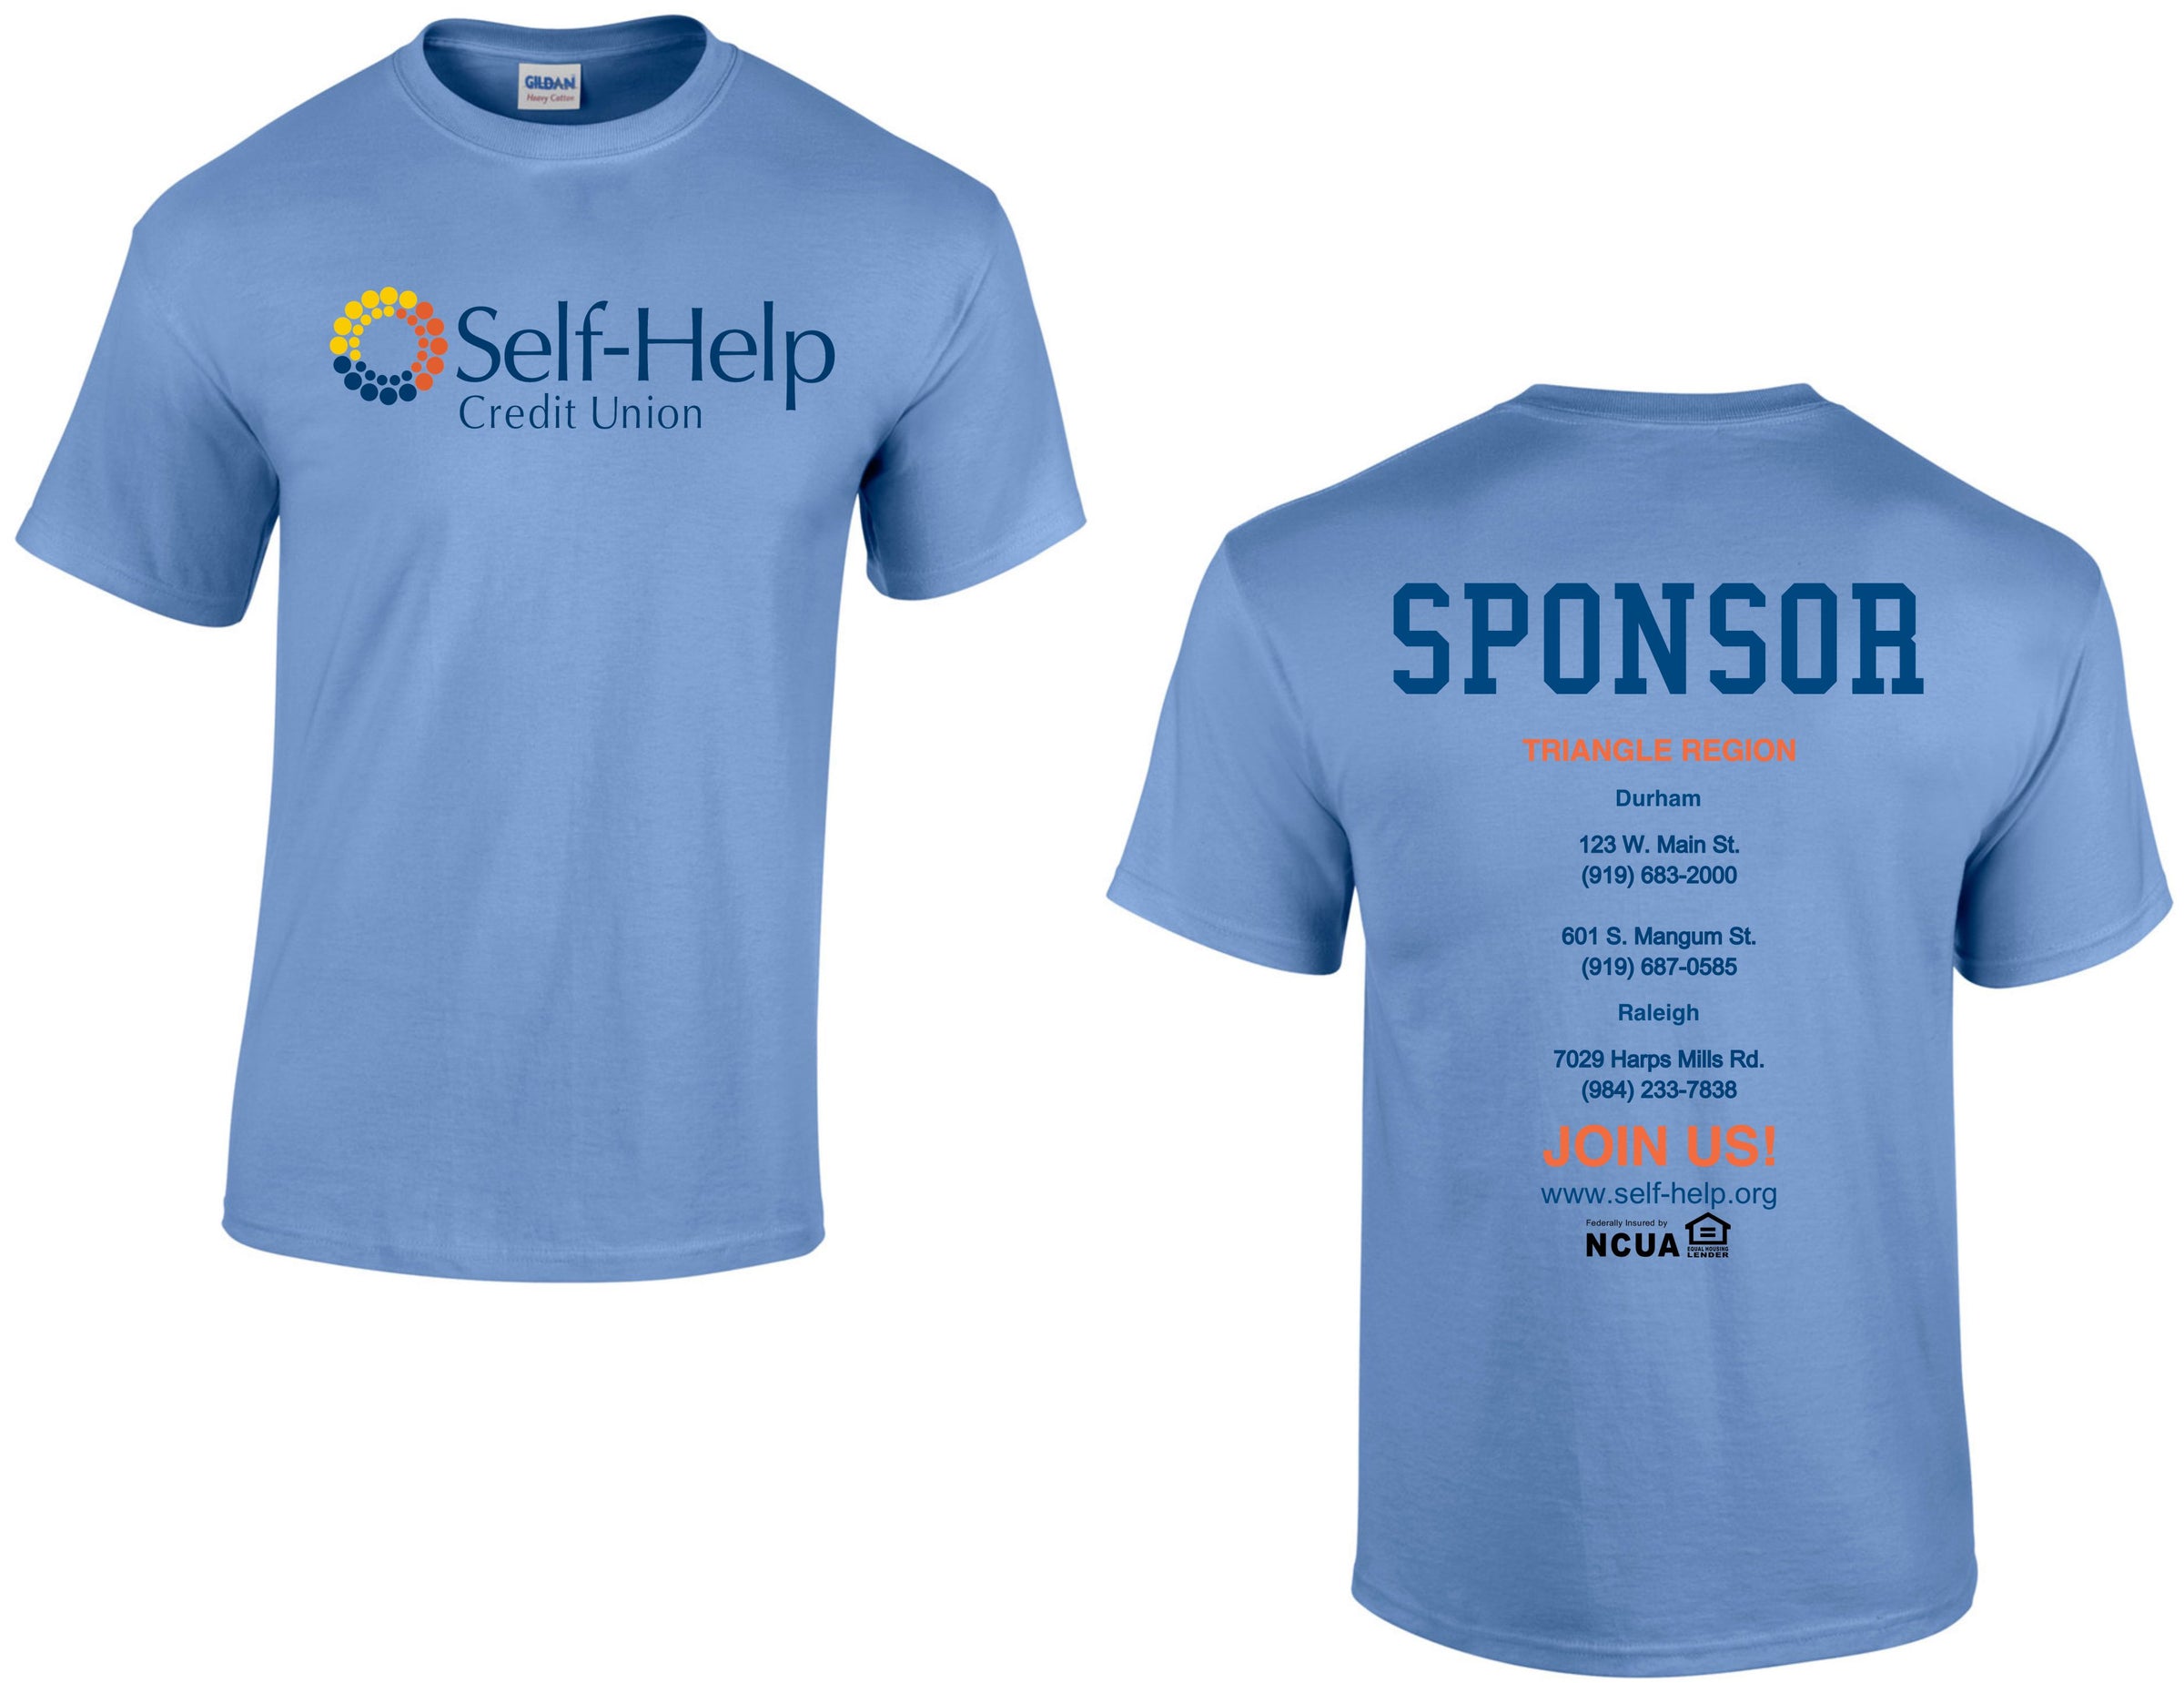 Self-Help Triangle Region Sponsor T-shirt